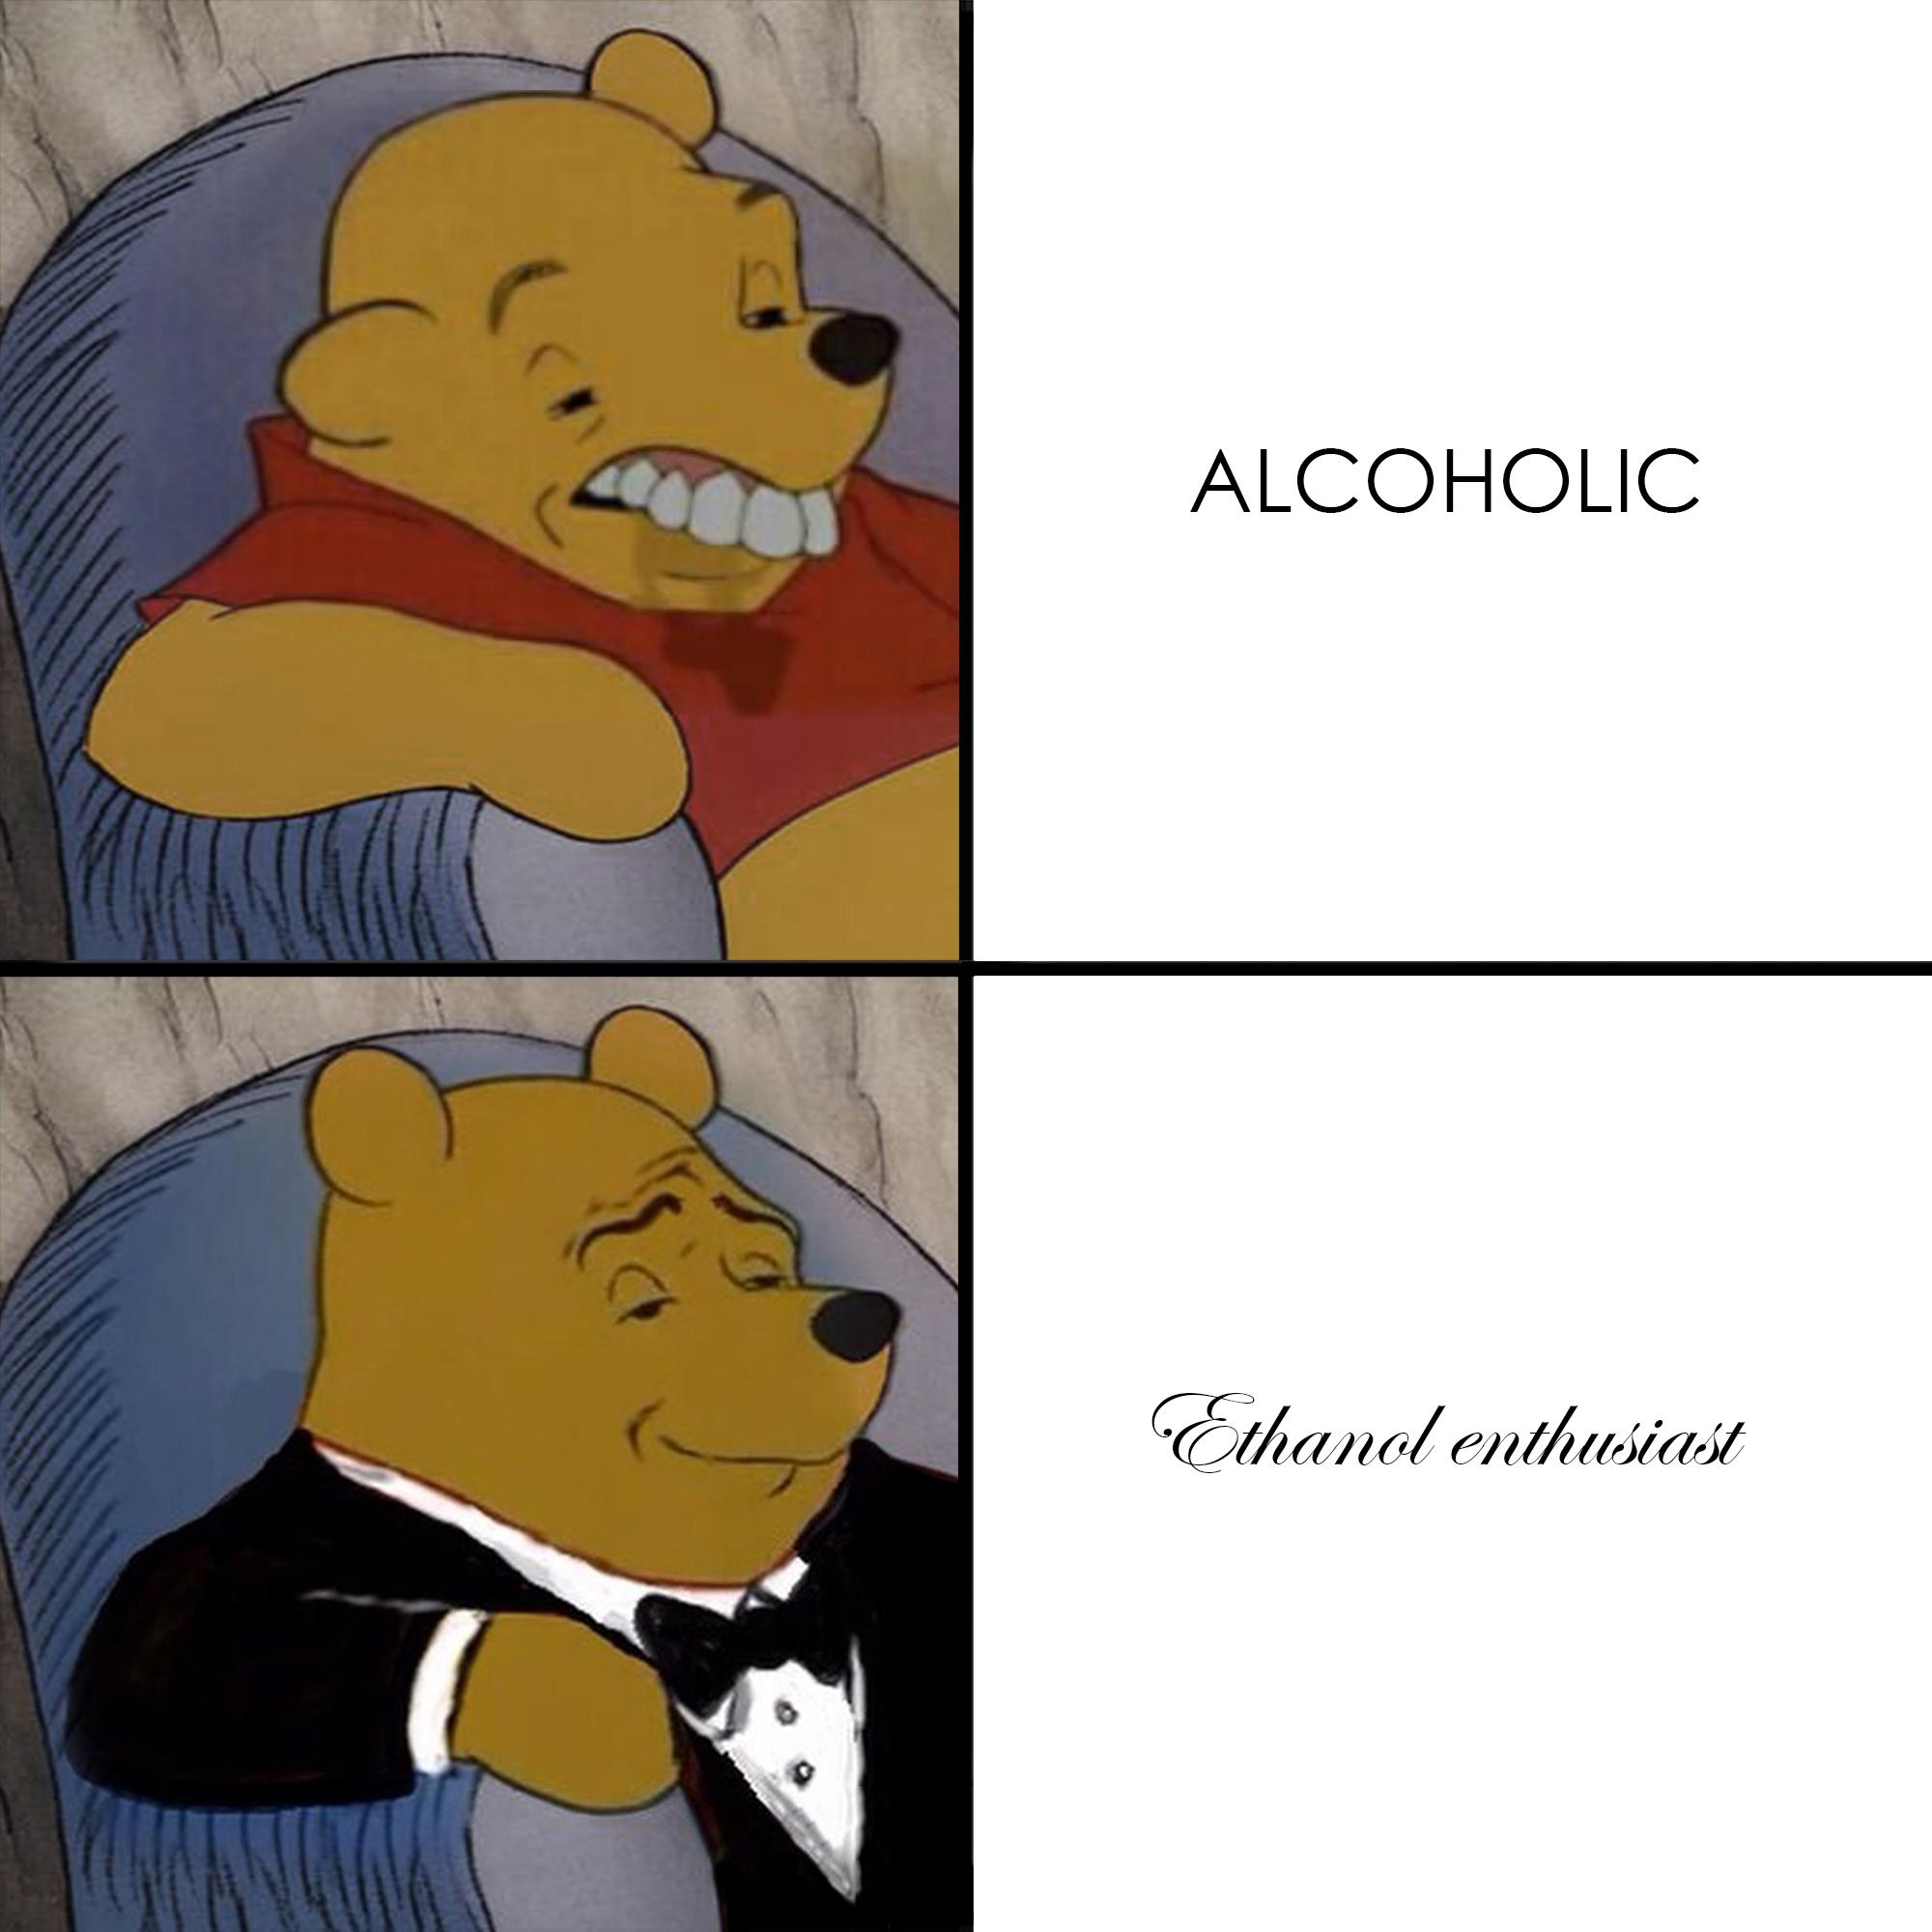 dank memes - funny memes - bandicam meme - Alcoholic Ethand enthusias